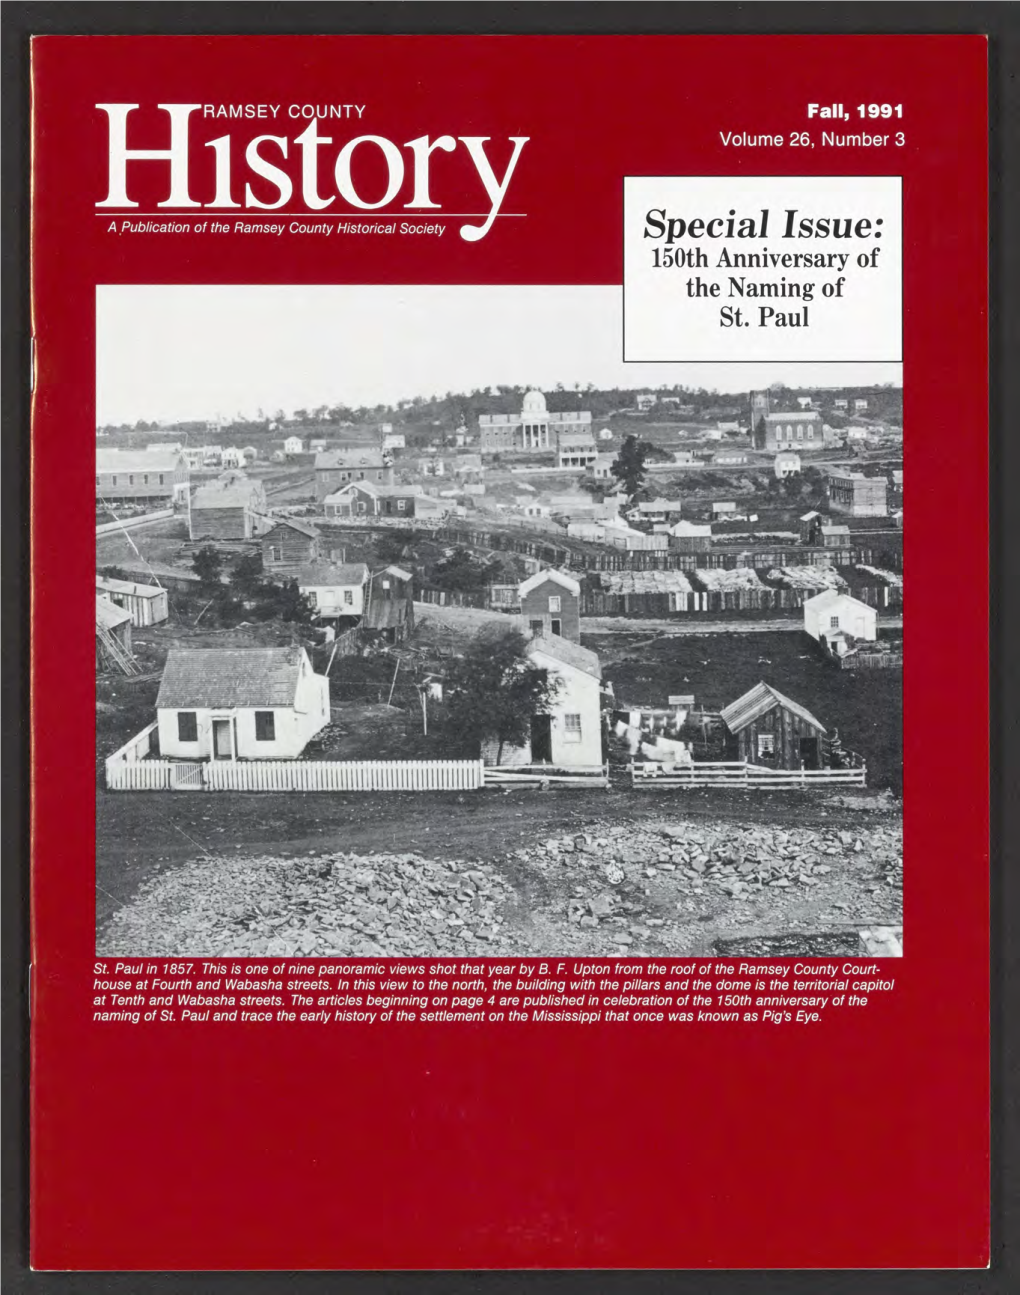 PDF of Historic Site